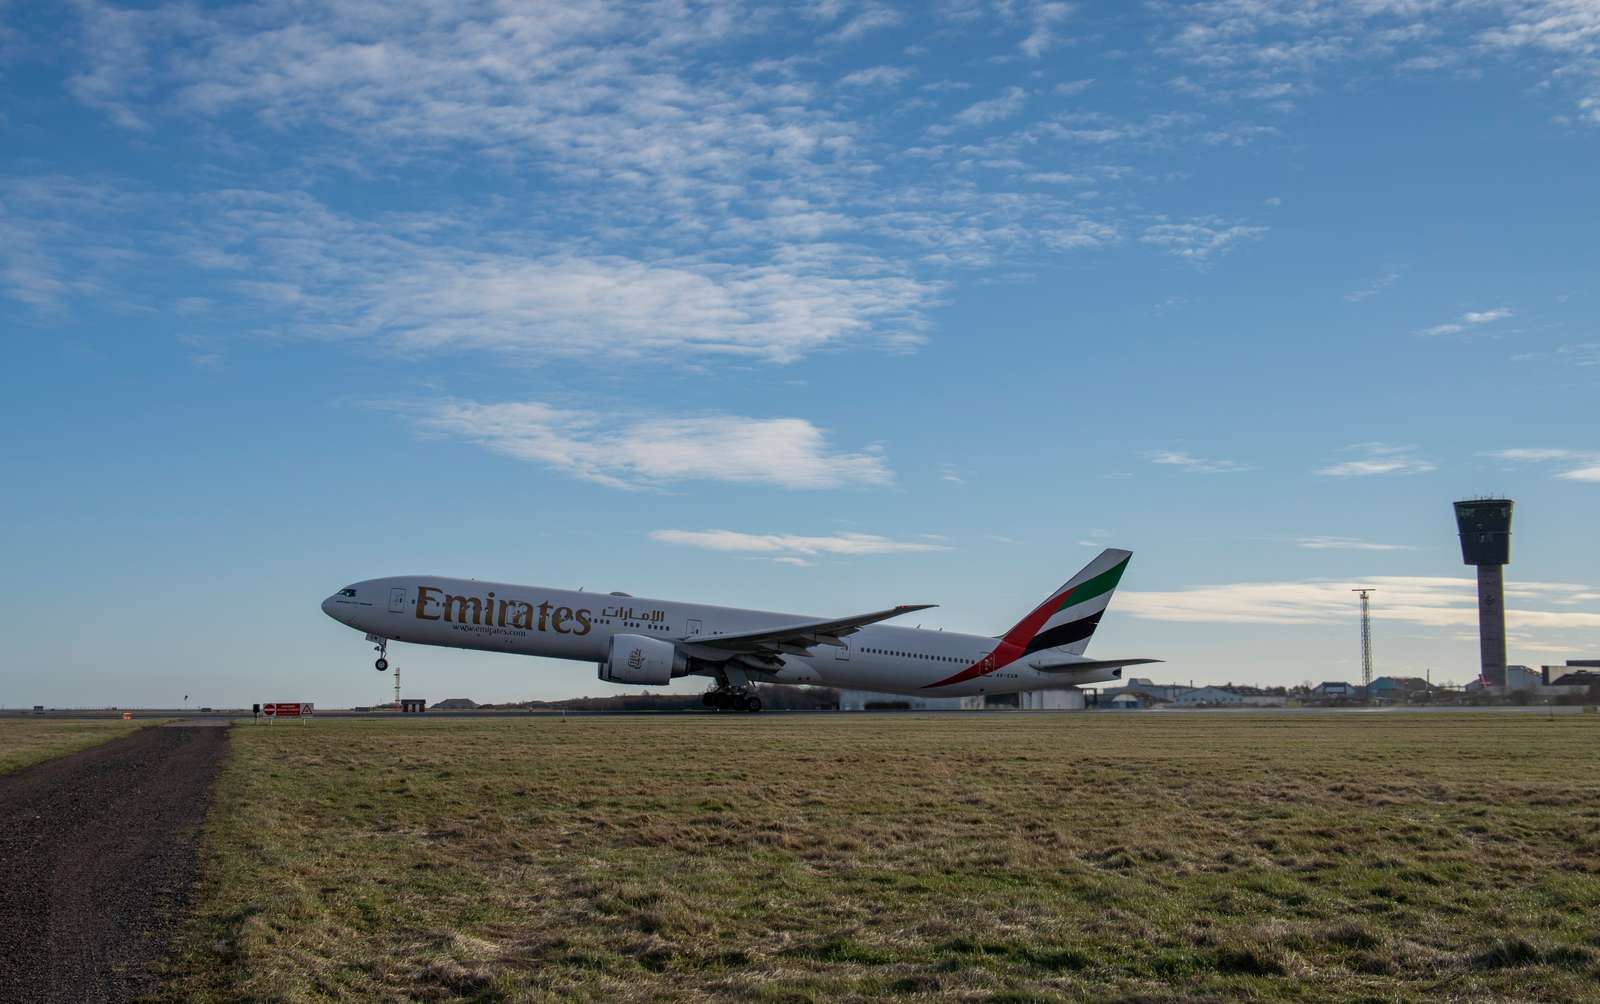 Emirates - takeoff